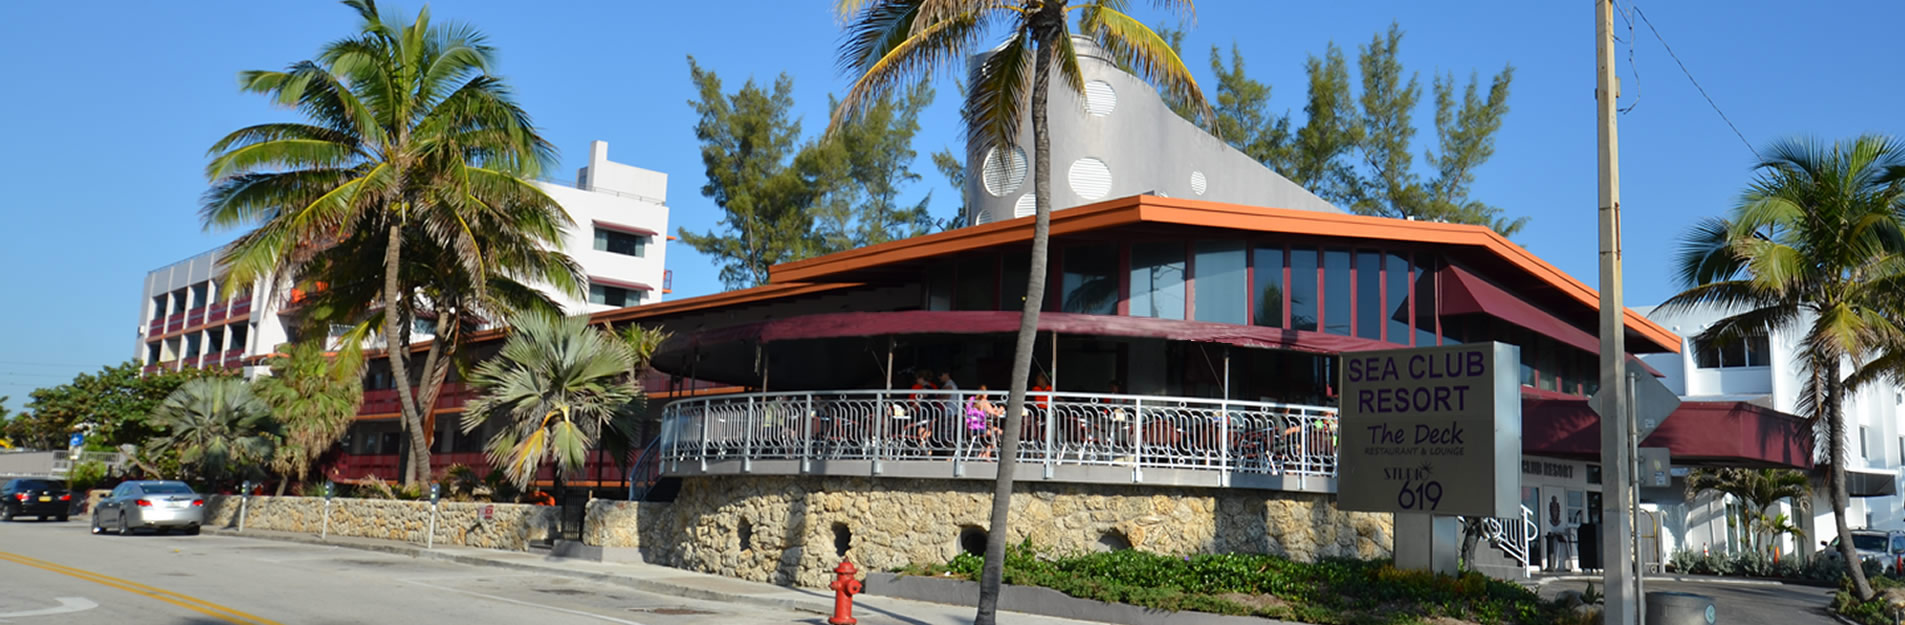 Sea Club Resort Ft Lauderdale